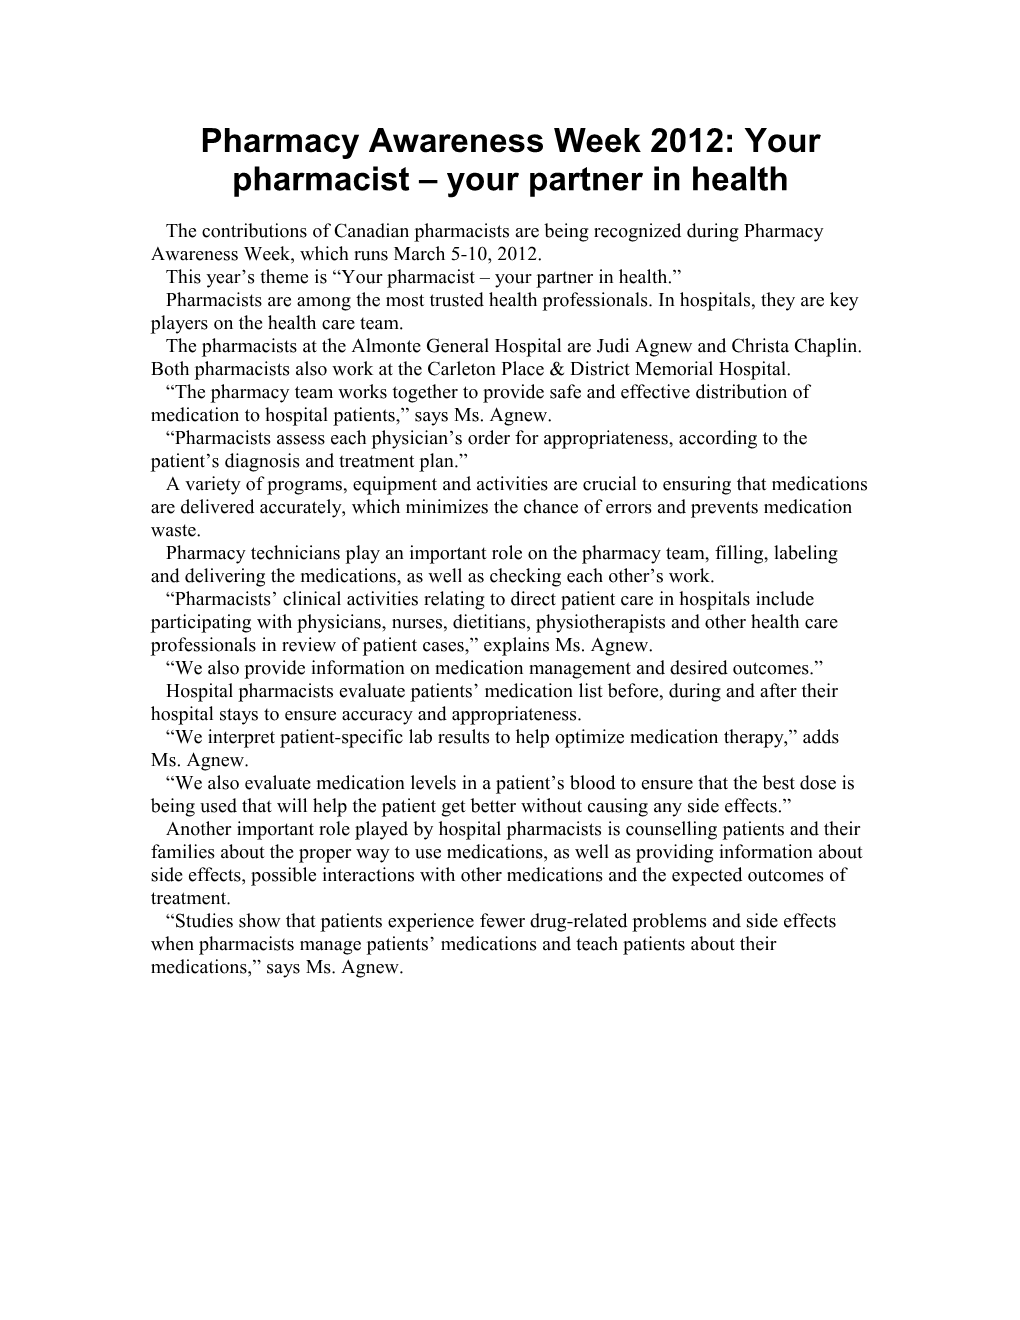 Pharmacy Awareness Week 2012: Your Pharmacist Your Partner in Health